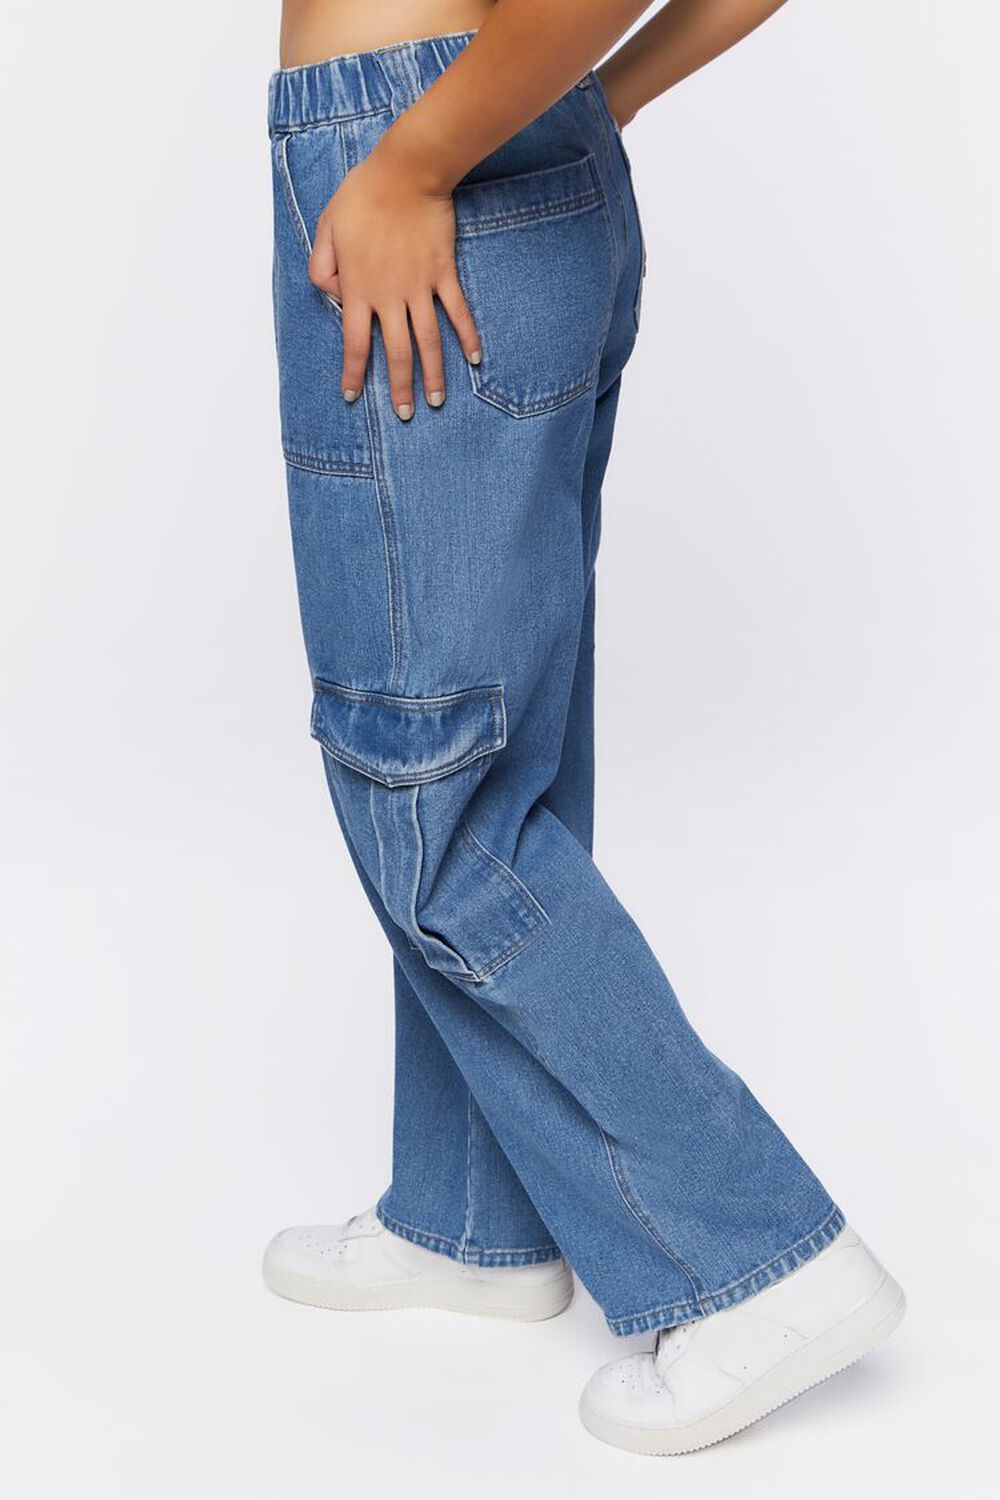 MEDIUM DENIM Cargo Ultra-Slouchy Jeans, image 3